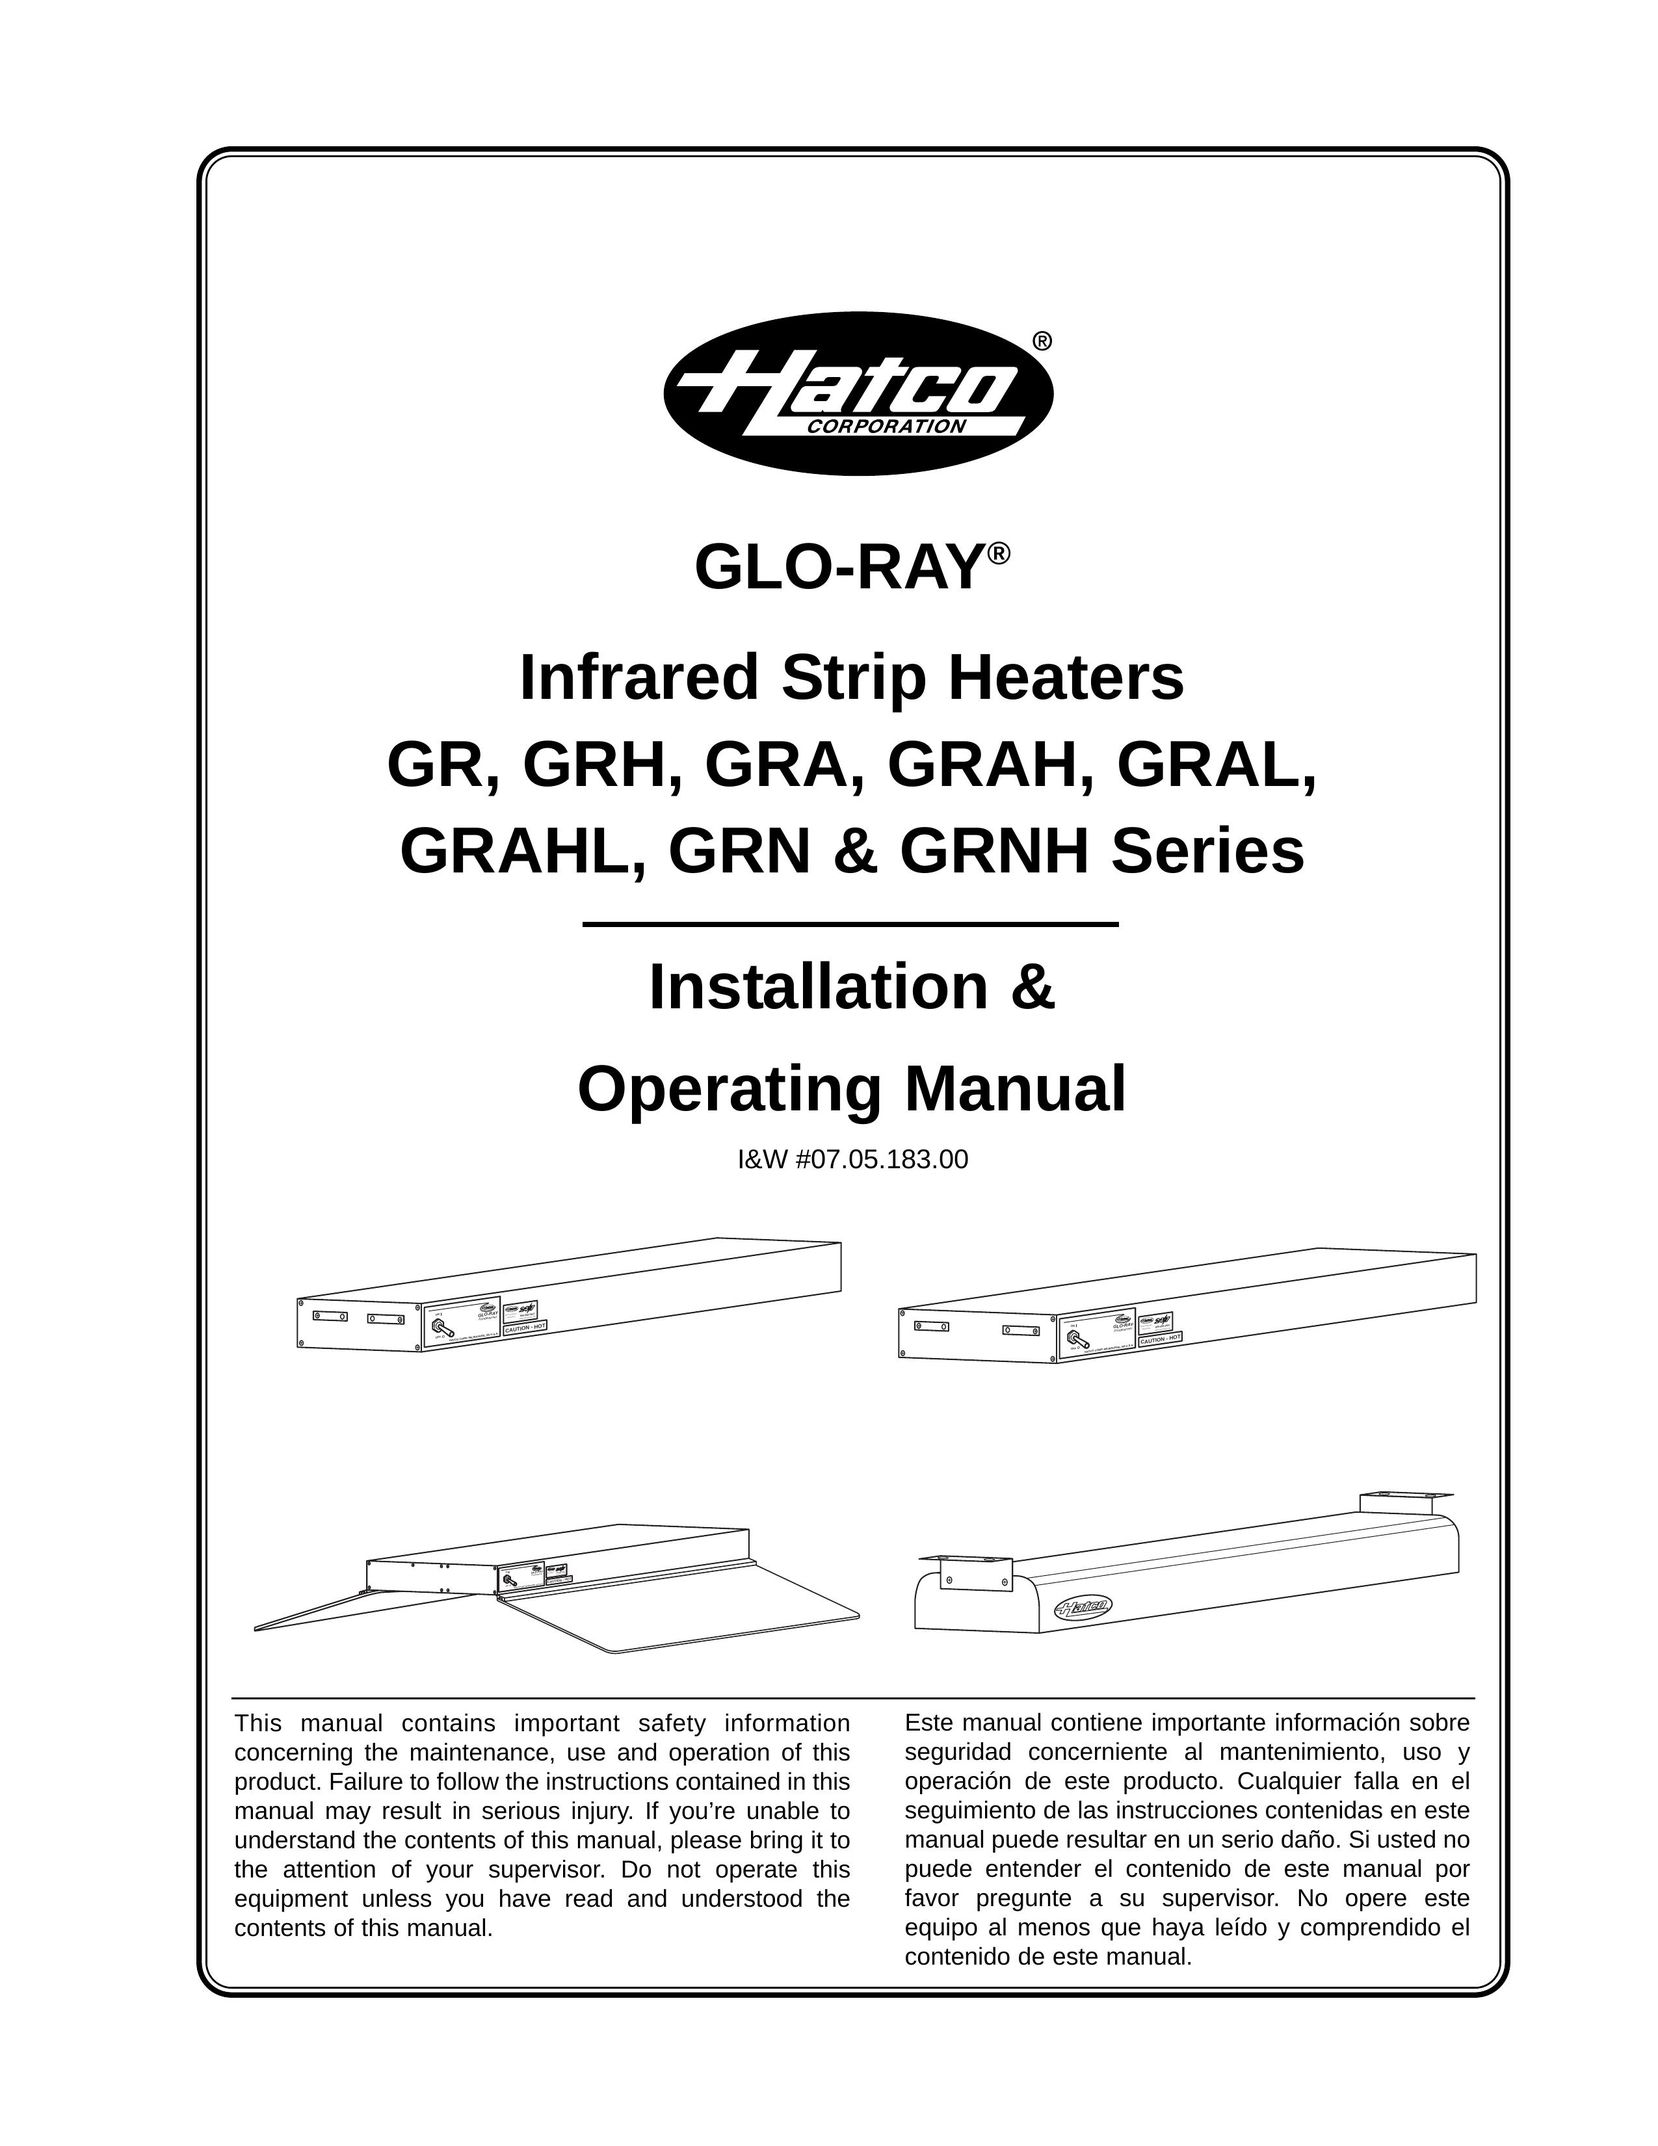 Hatco GRN Printer Accessories User Manual